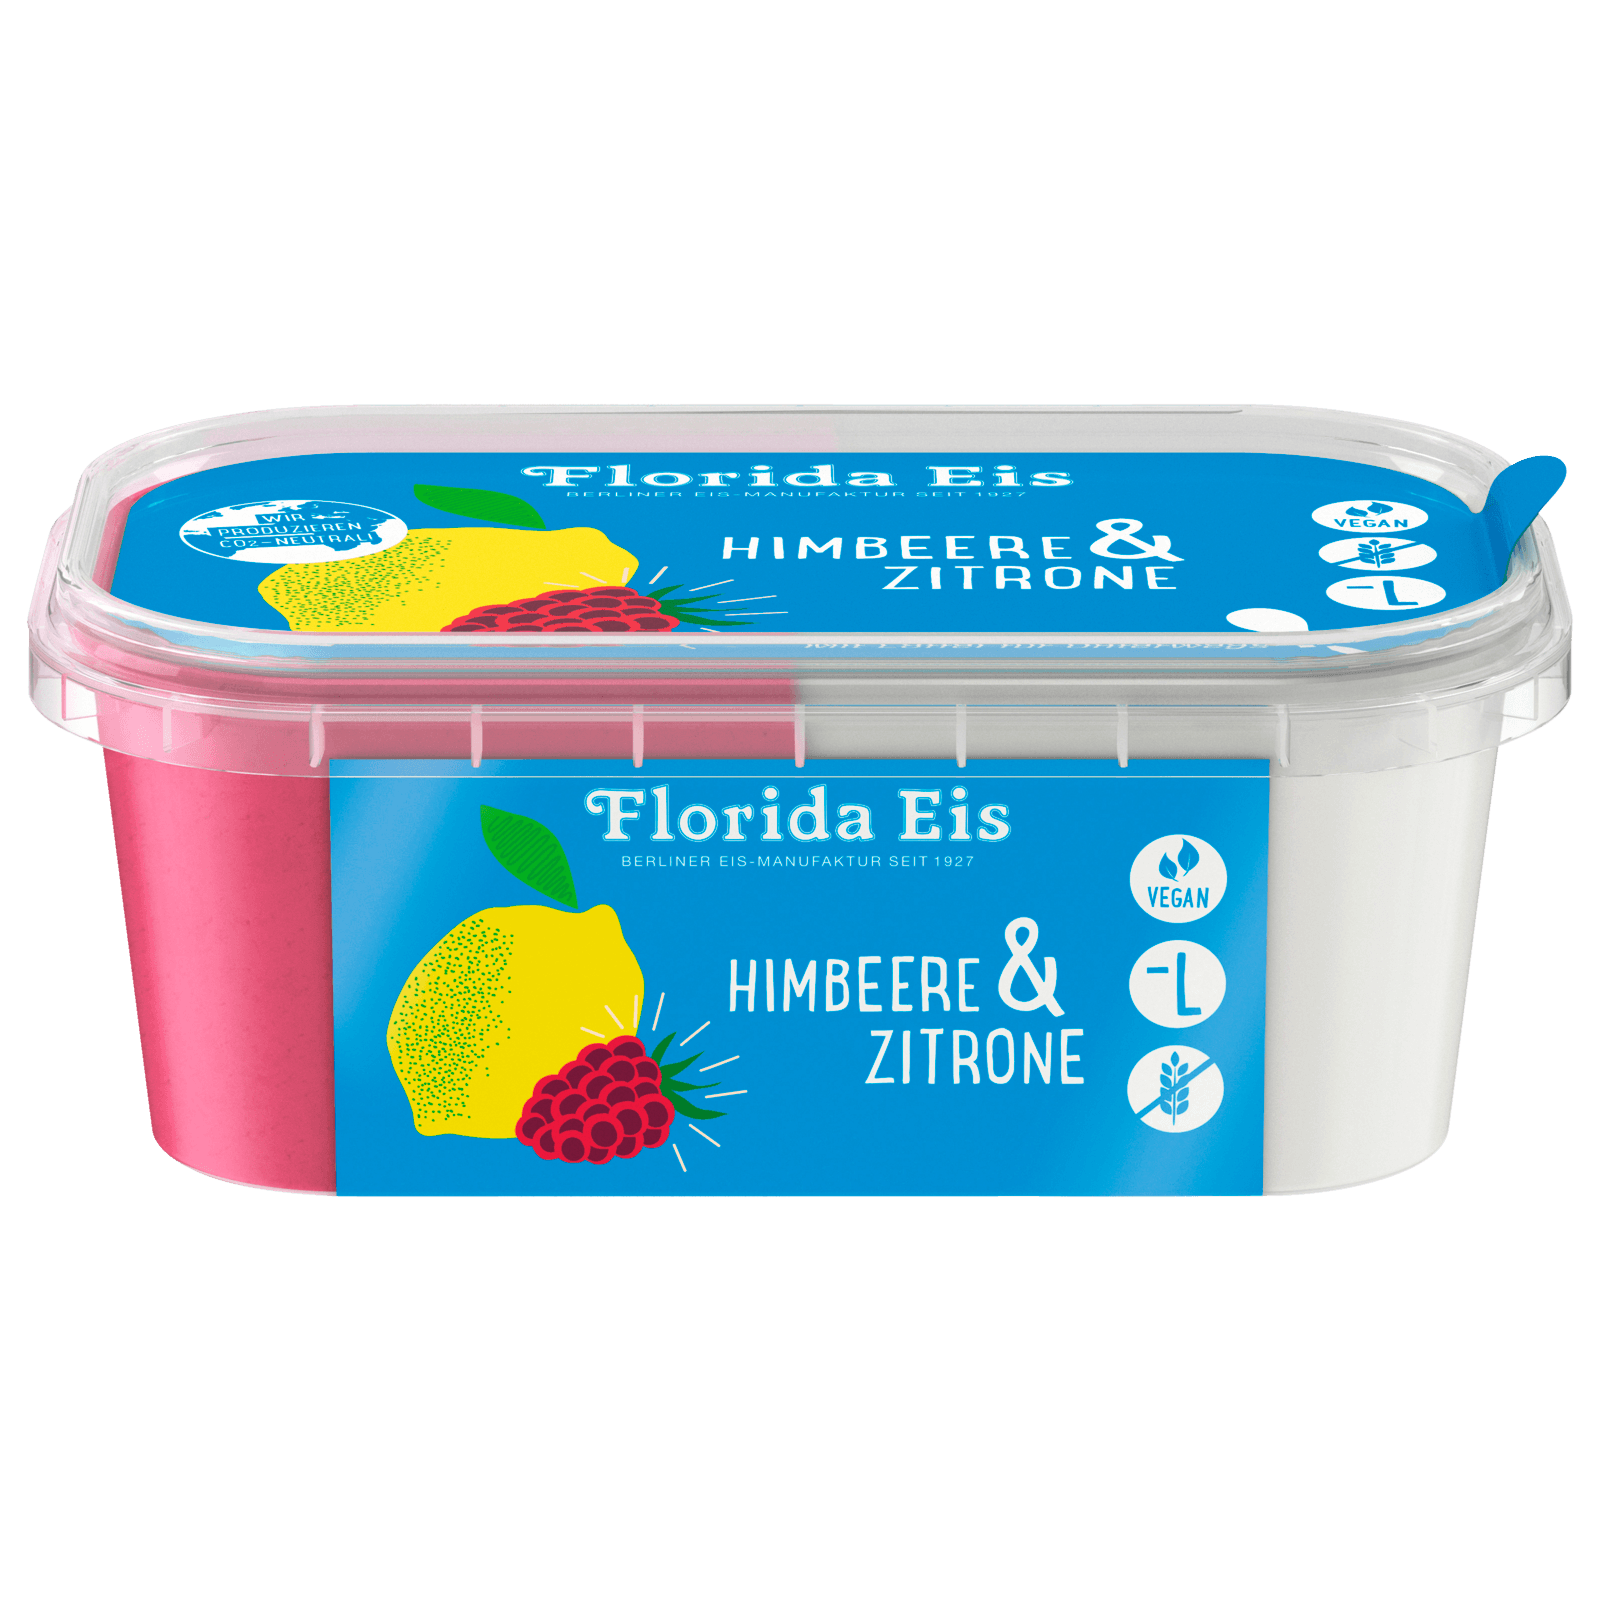 Florida Eis Himbeere & Zitrone laktosefrei glutenfrei vegan 150ml  für 2.29 EUR